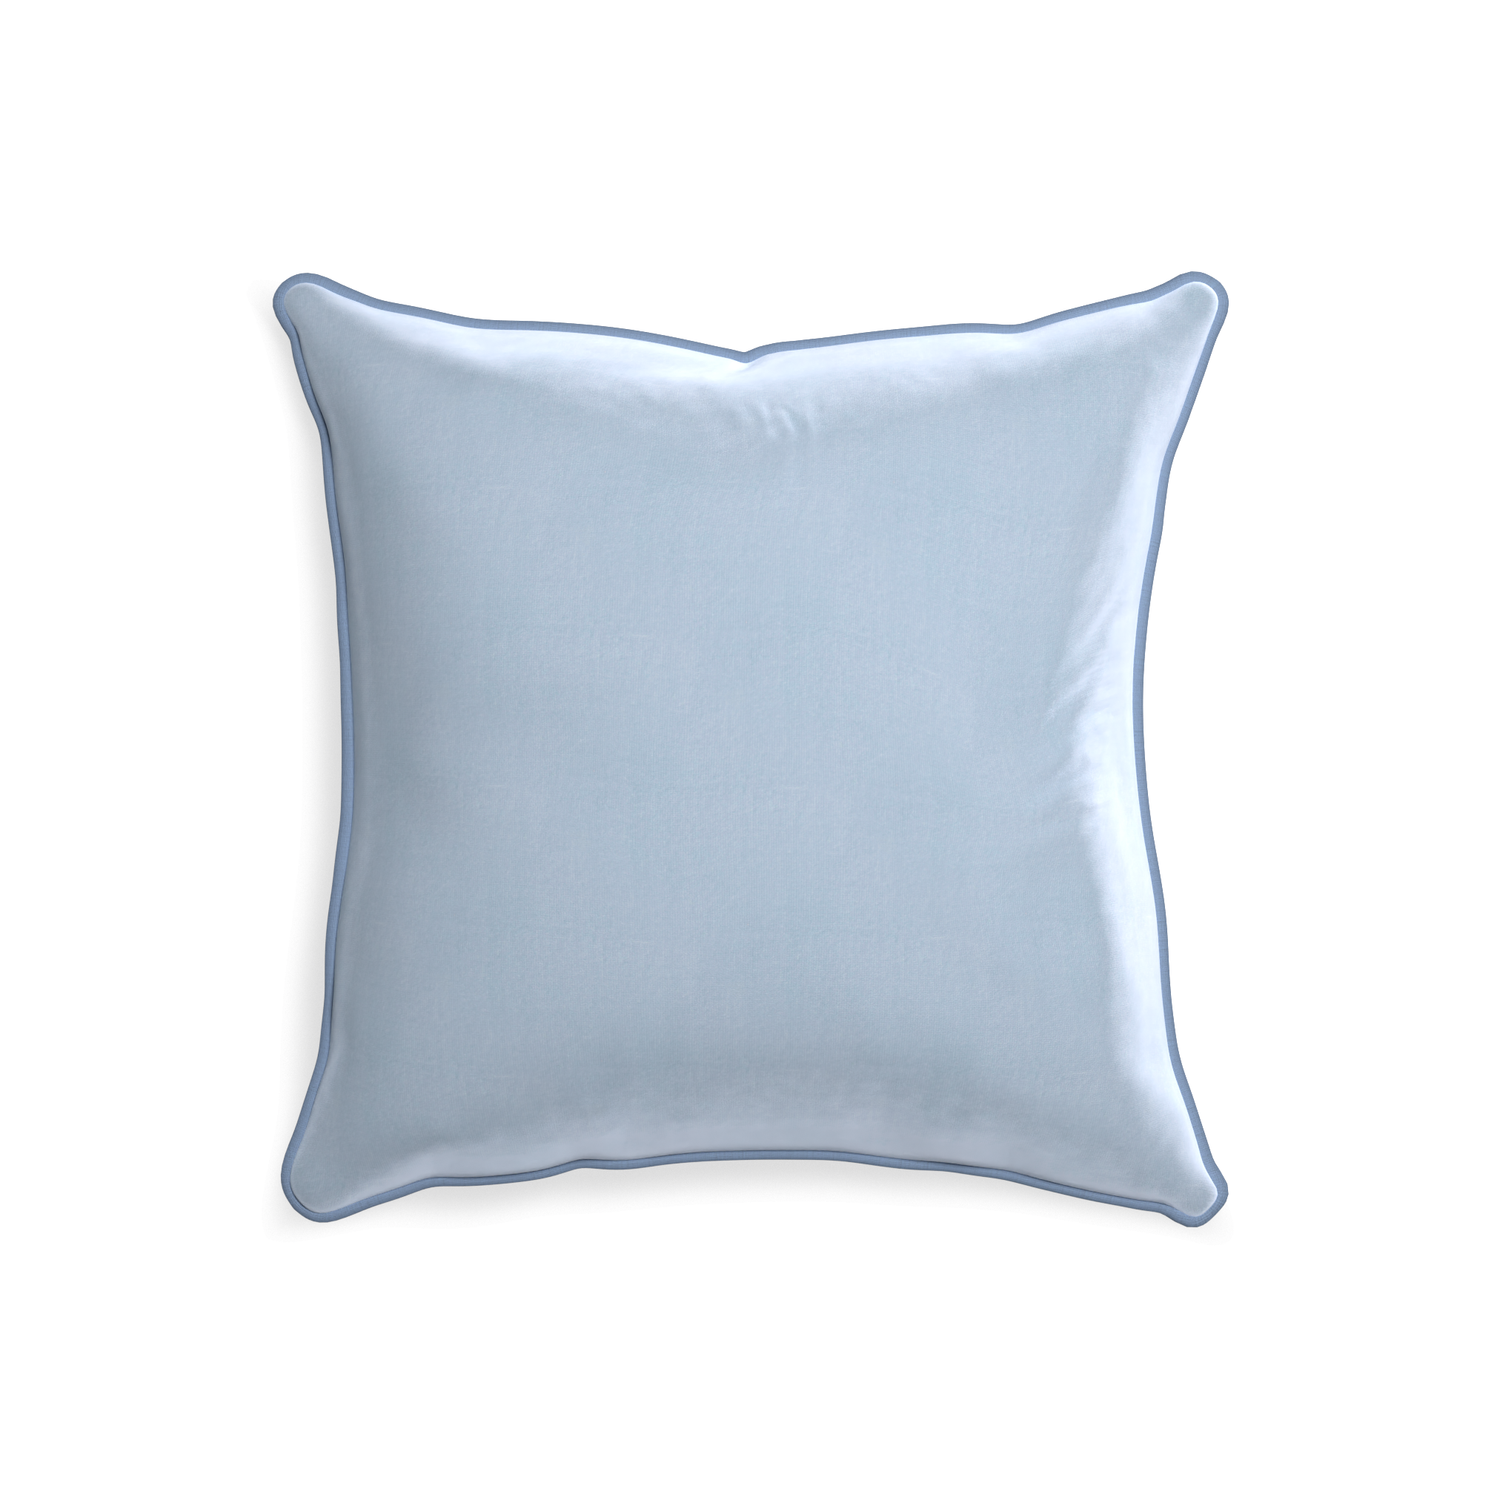 20-square sky velvet custom pillow with sky piping on white background